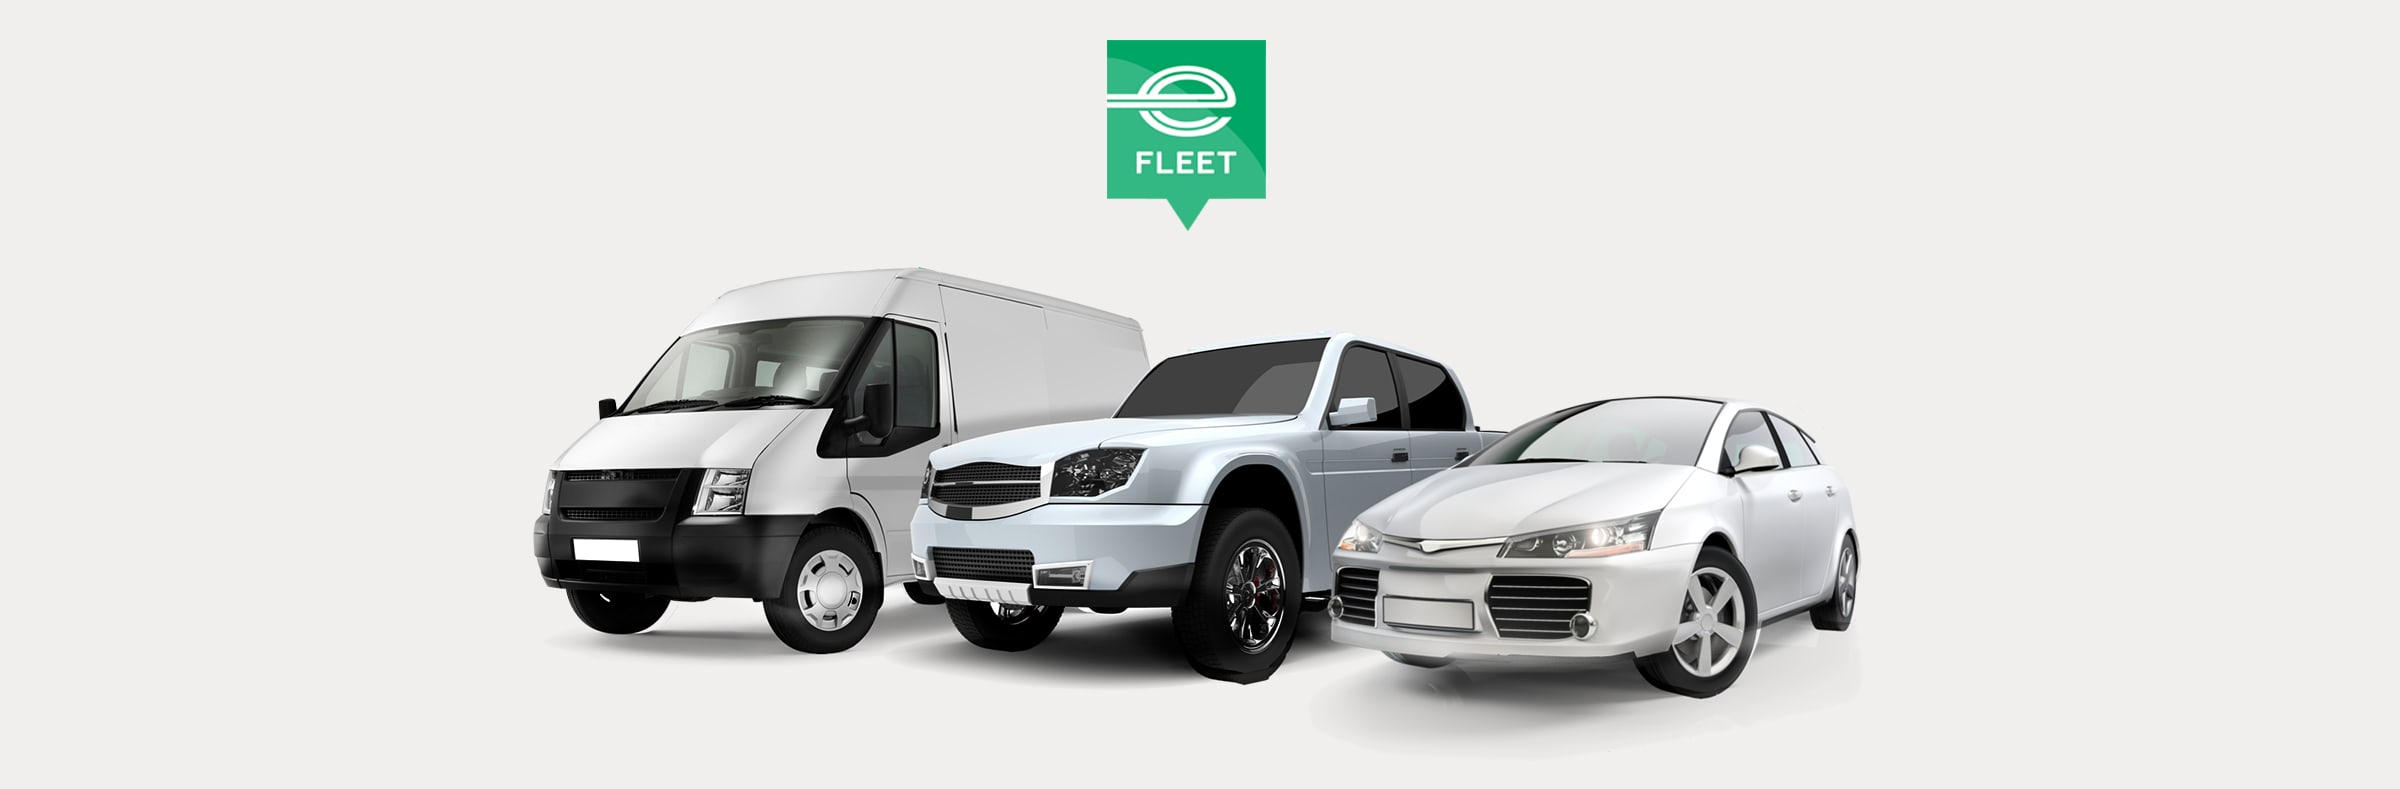 Enterprise Fleet Management Website Element Cars